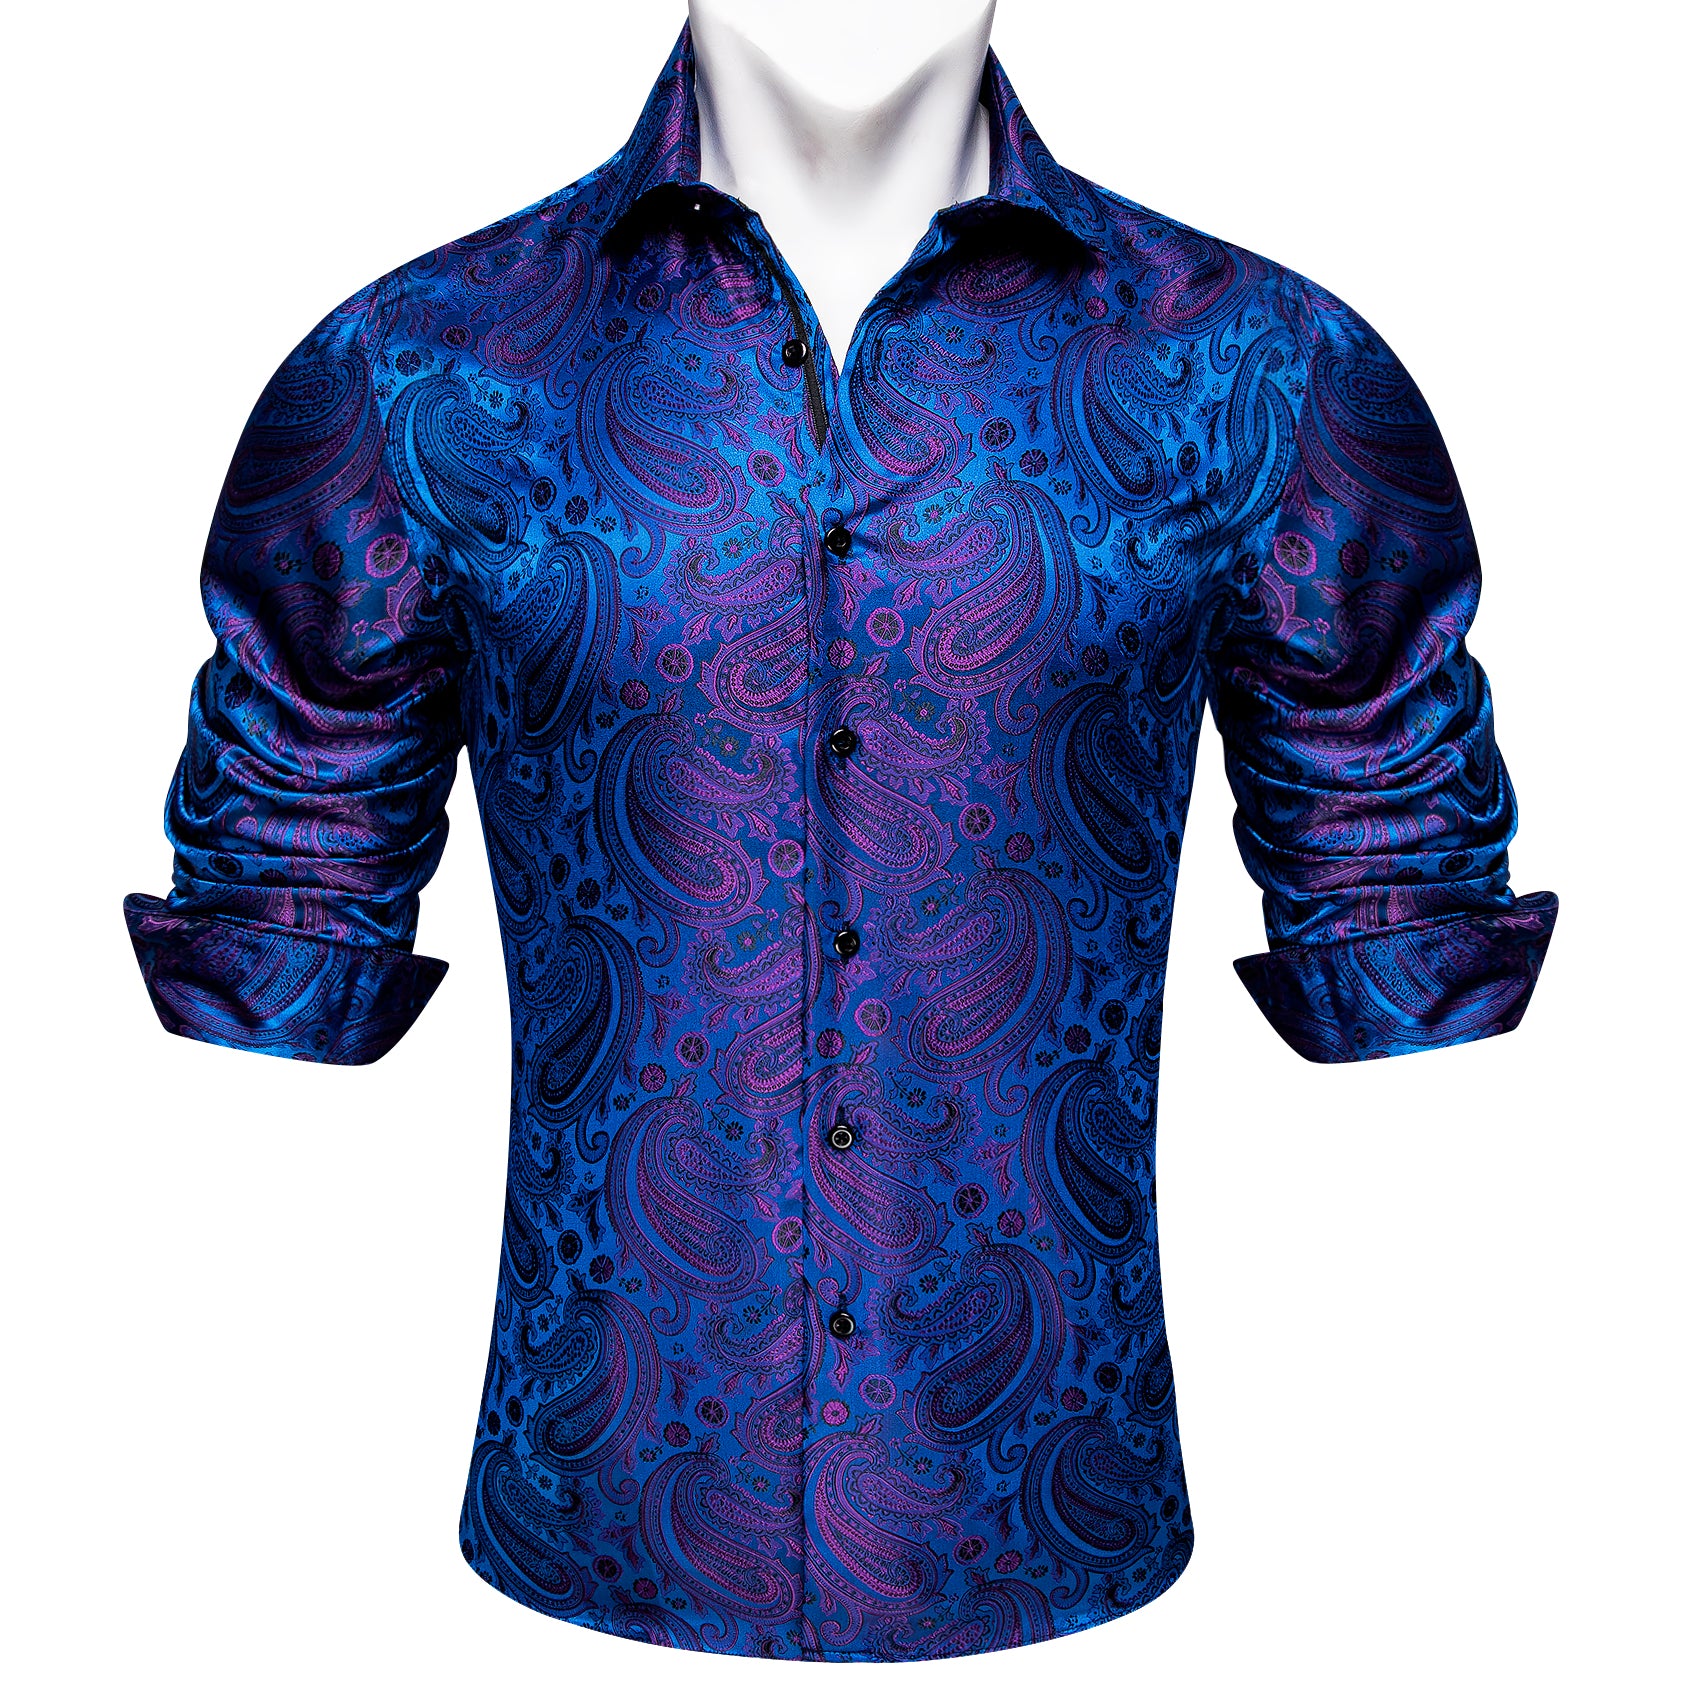 Barry.wang Blue Purple Paisley Silk Men's Shirt